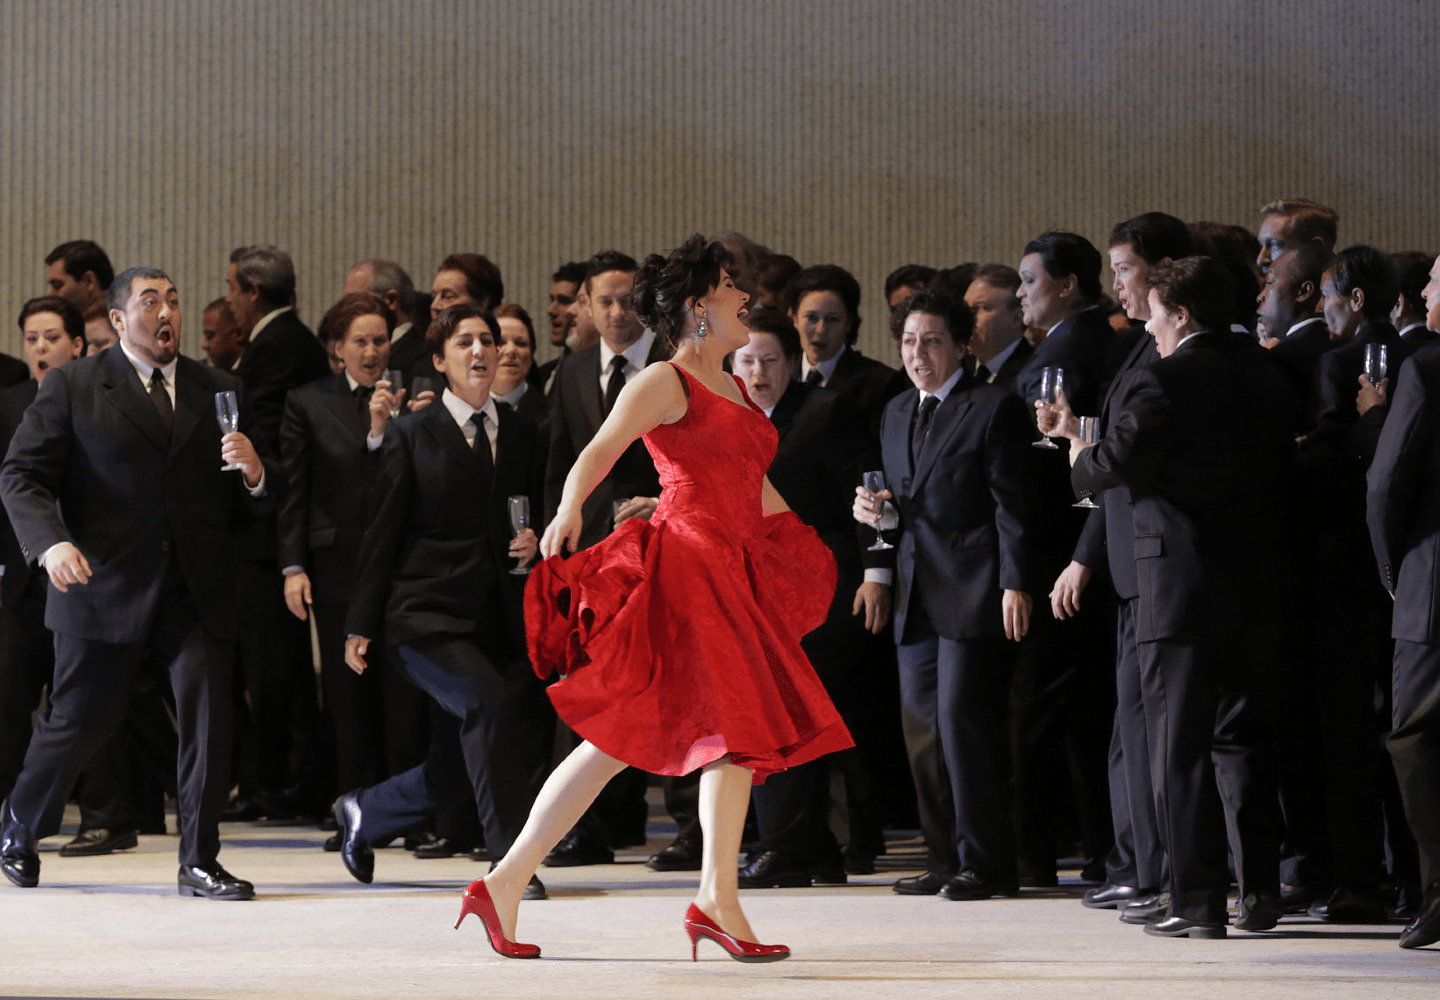 La Traviata – Nightly Met Opera streams